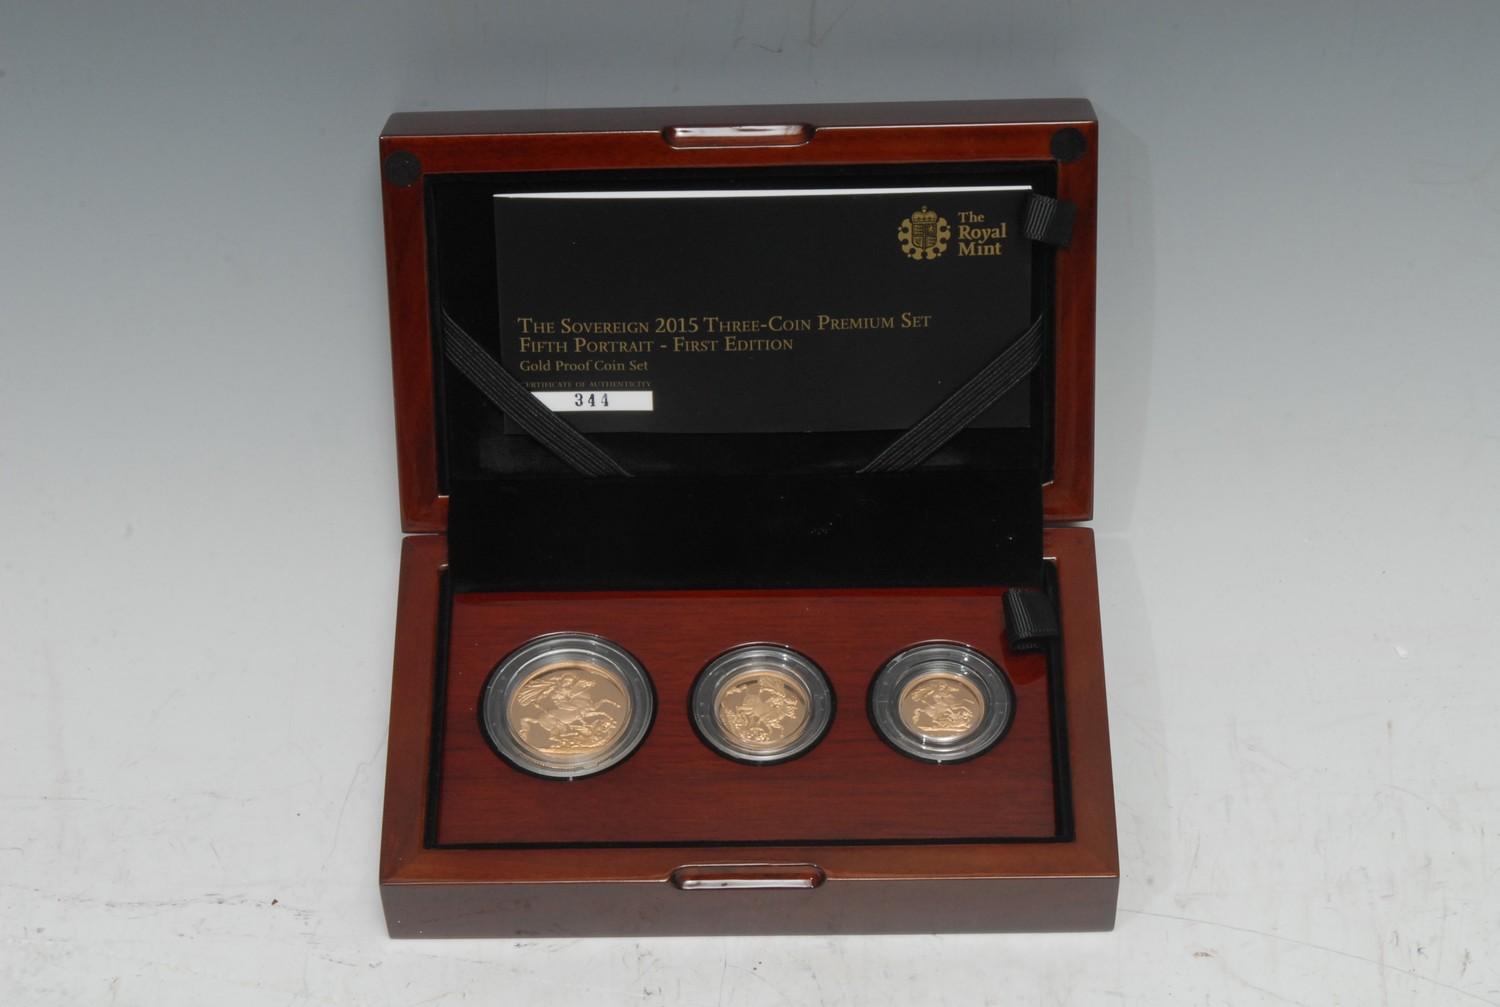 Coins, GB, Elizabeth II, The Sovereign 2015 Three-Coin Premium Set, Fifth Portrait - First